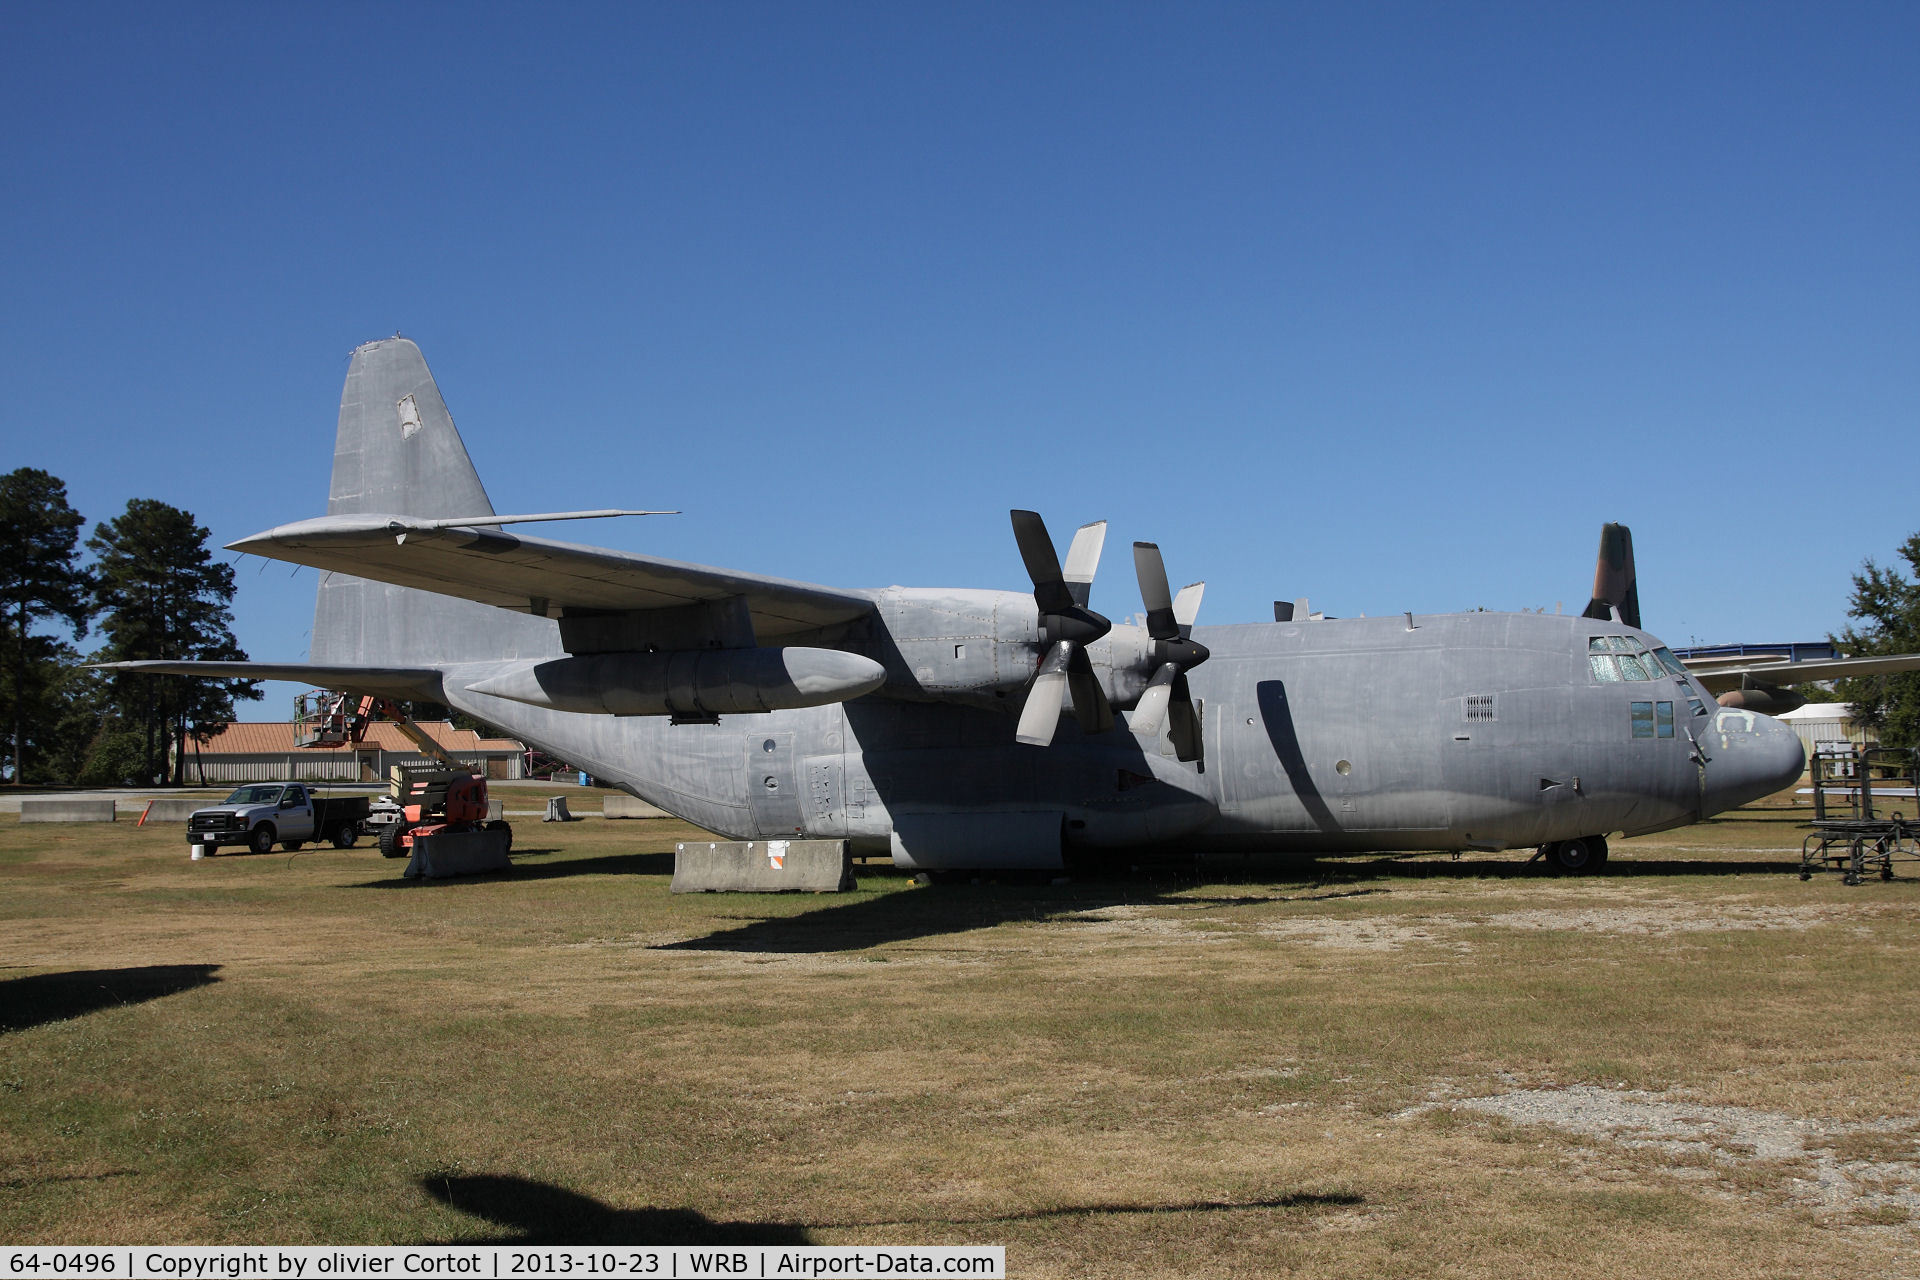 64-0496, 1964 Lockheed C-130E Hercules C/N 382-3980, ex-ramstein Hercules